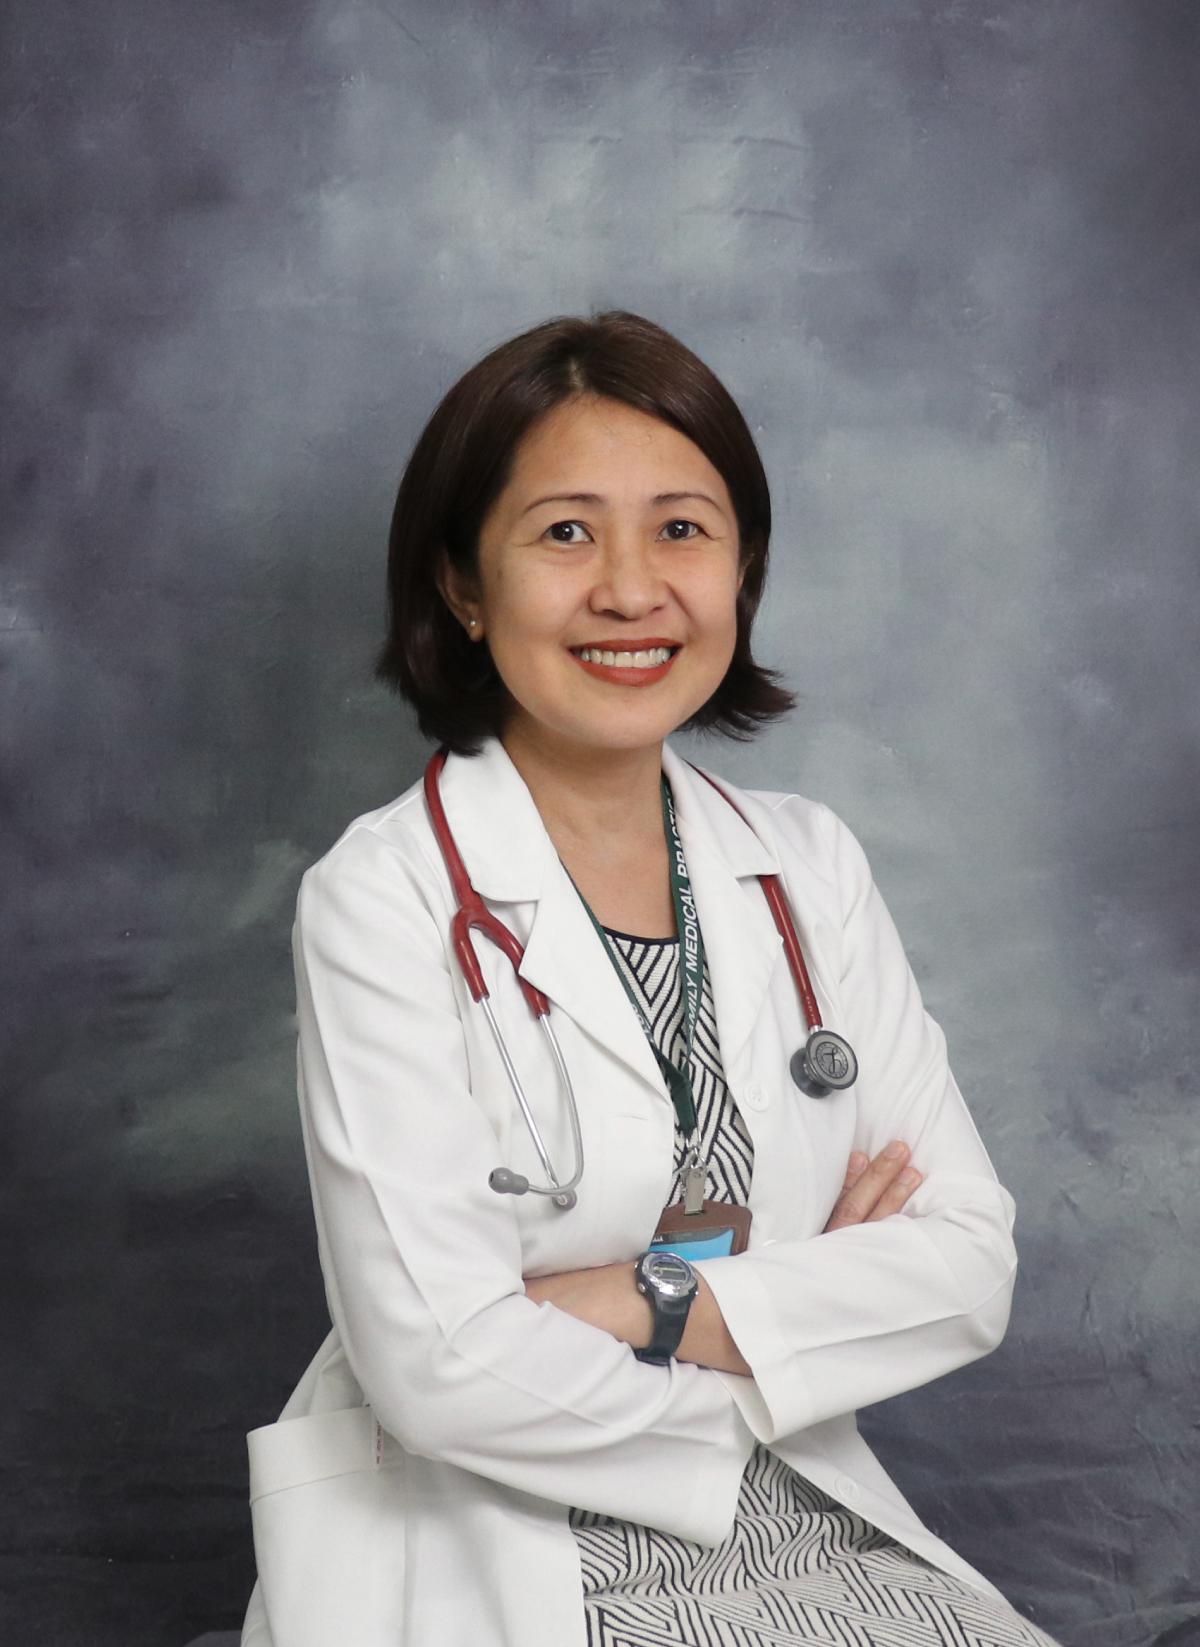 Dr. Sheila Rodriguez